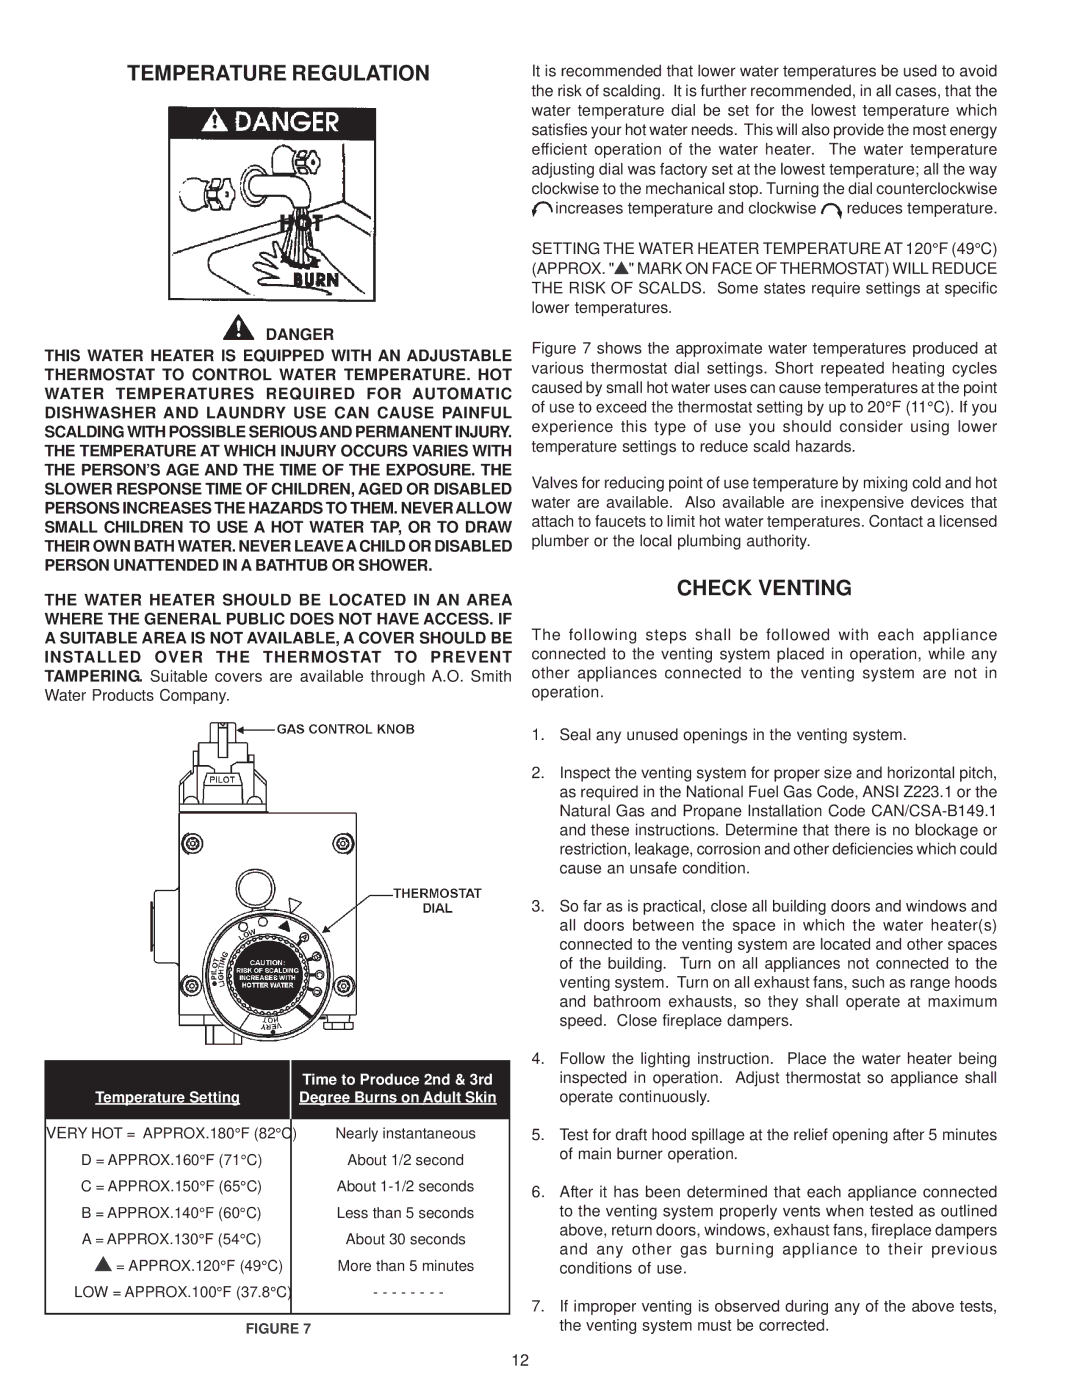 A.O. Smith BT- 80 warranty Temperature Regulation, Check Venting 